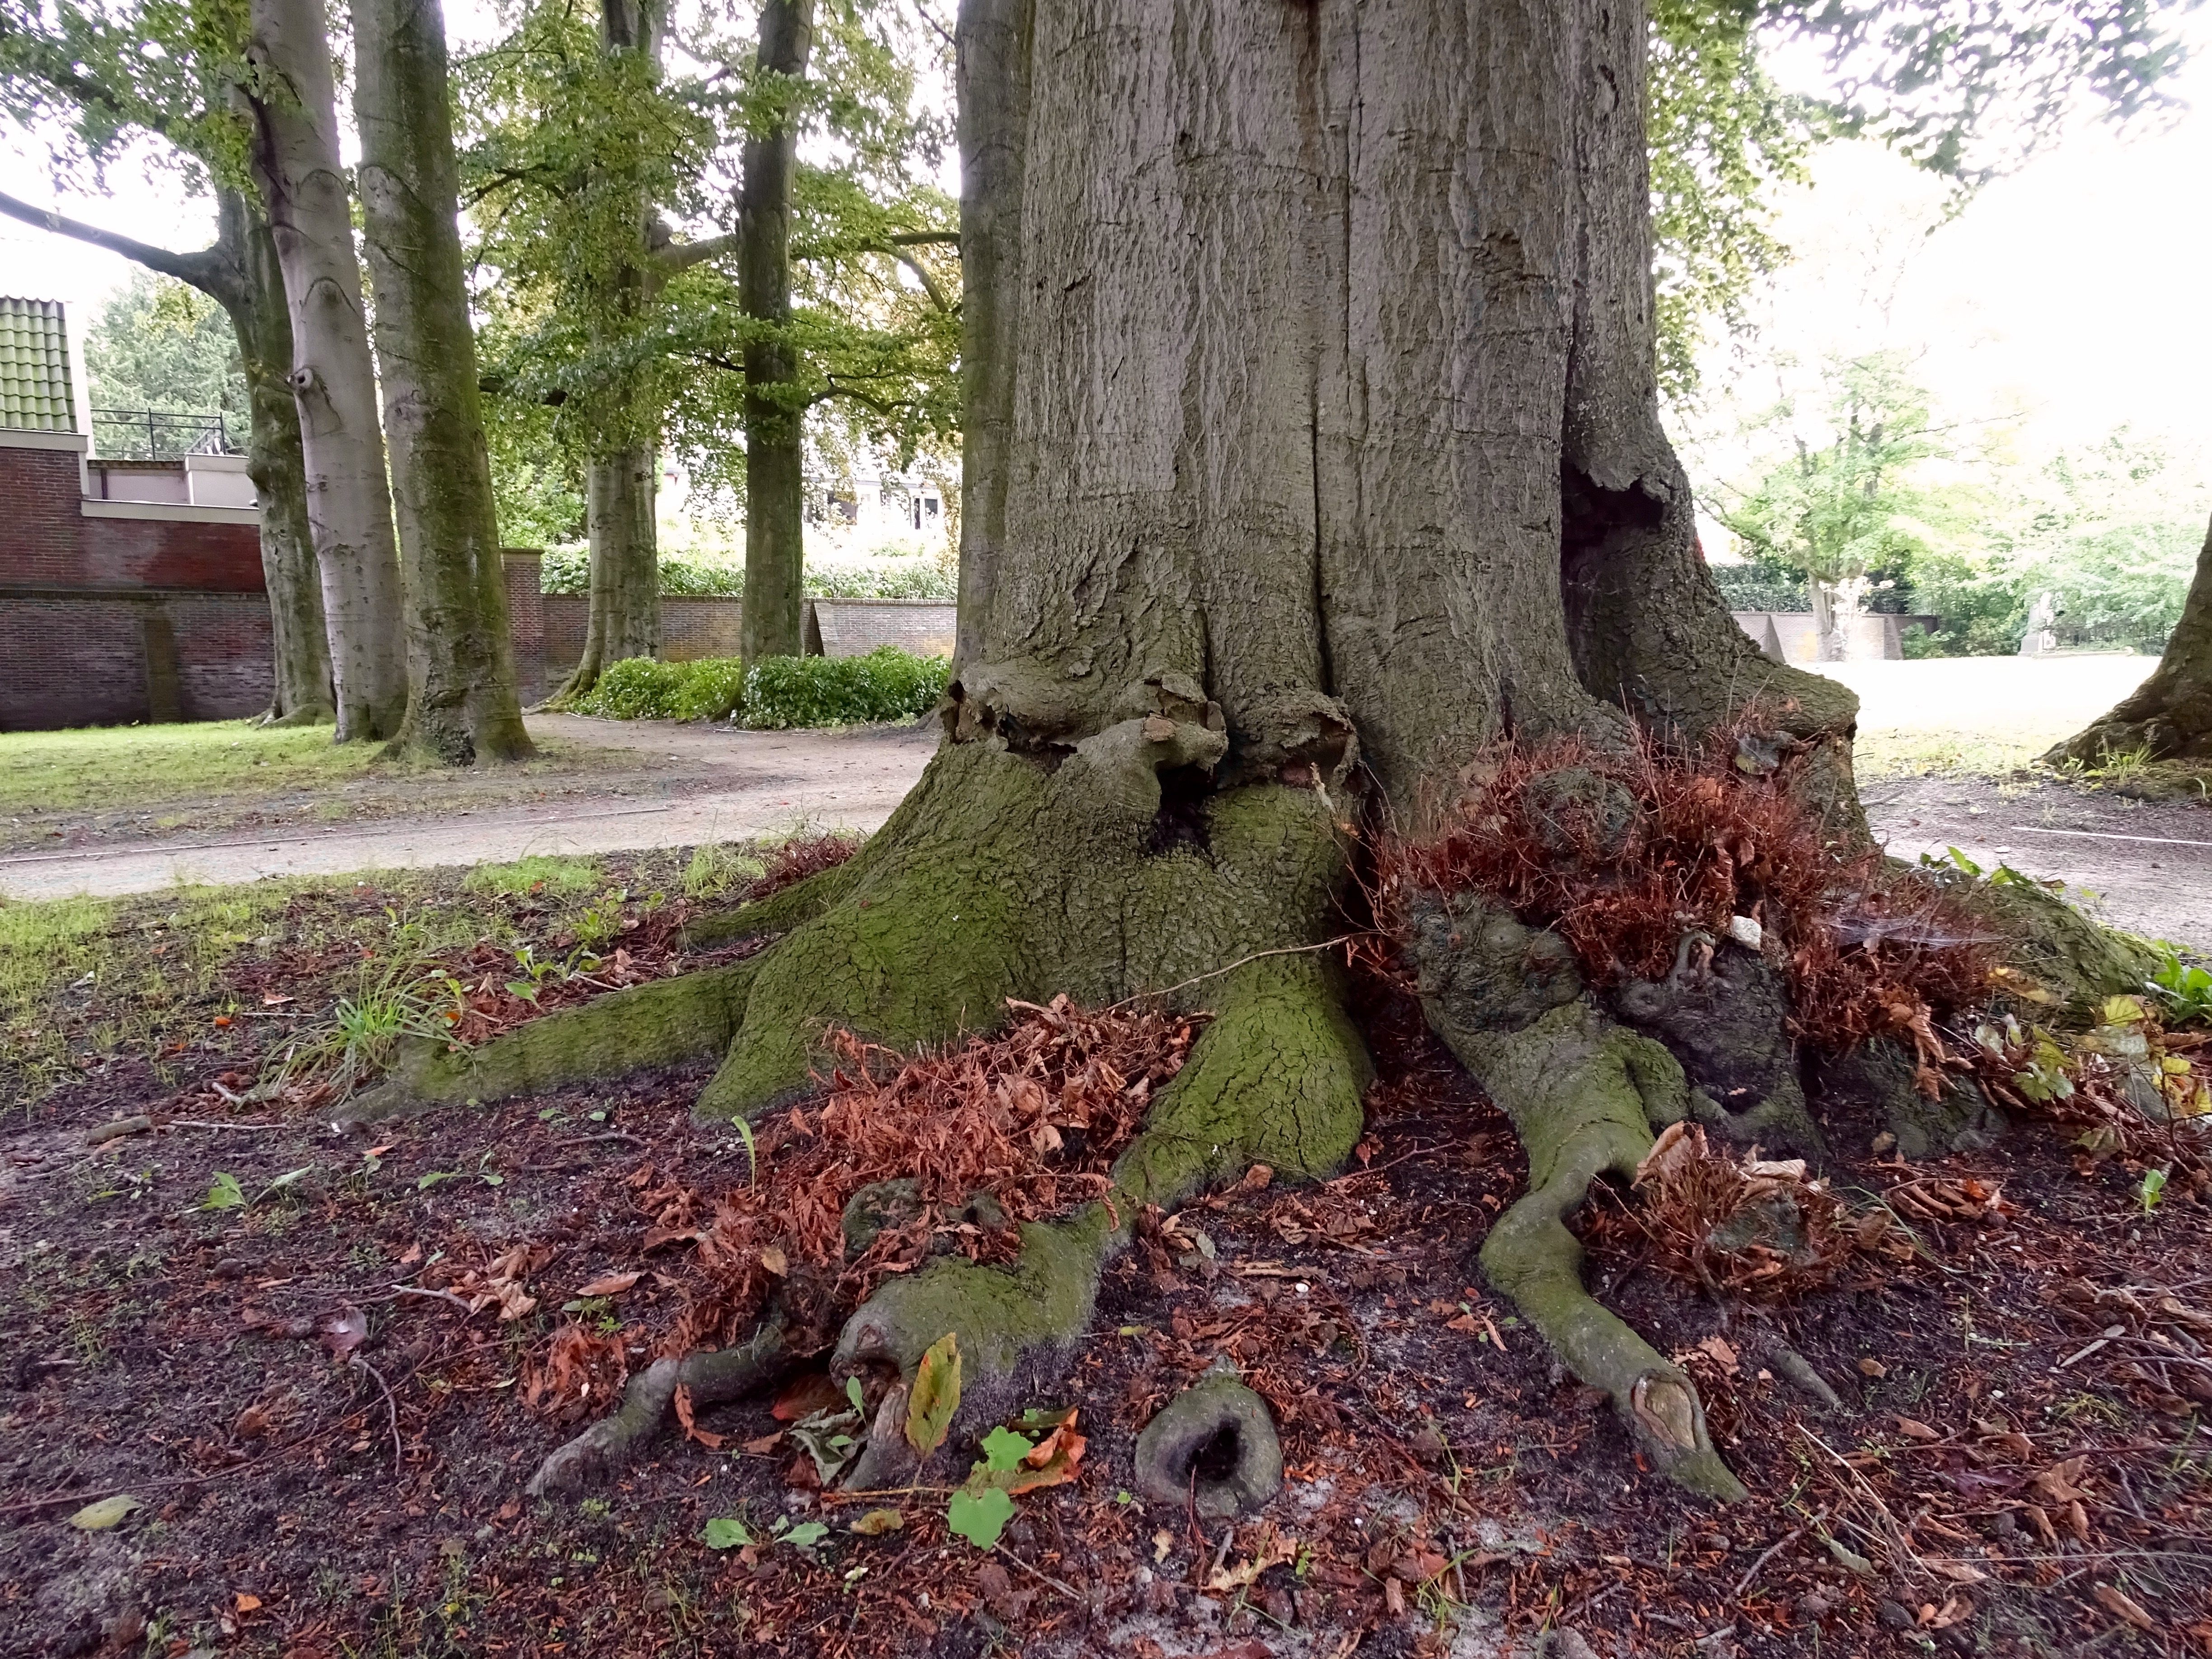 Interesting tree trunk photo